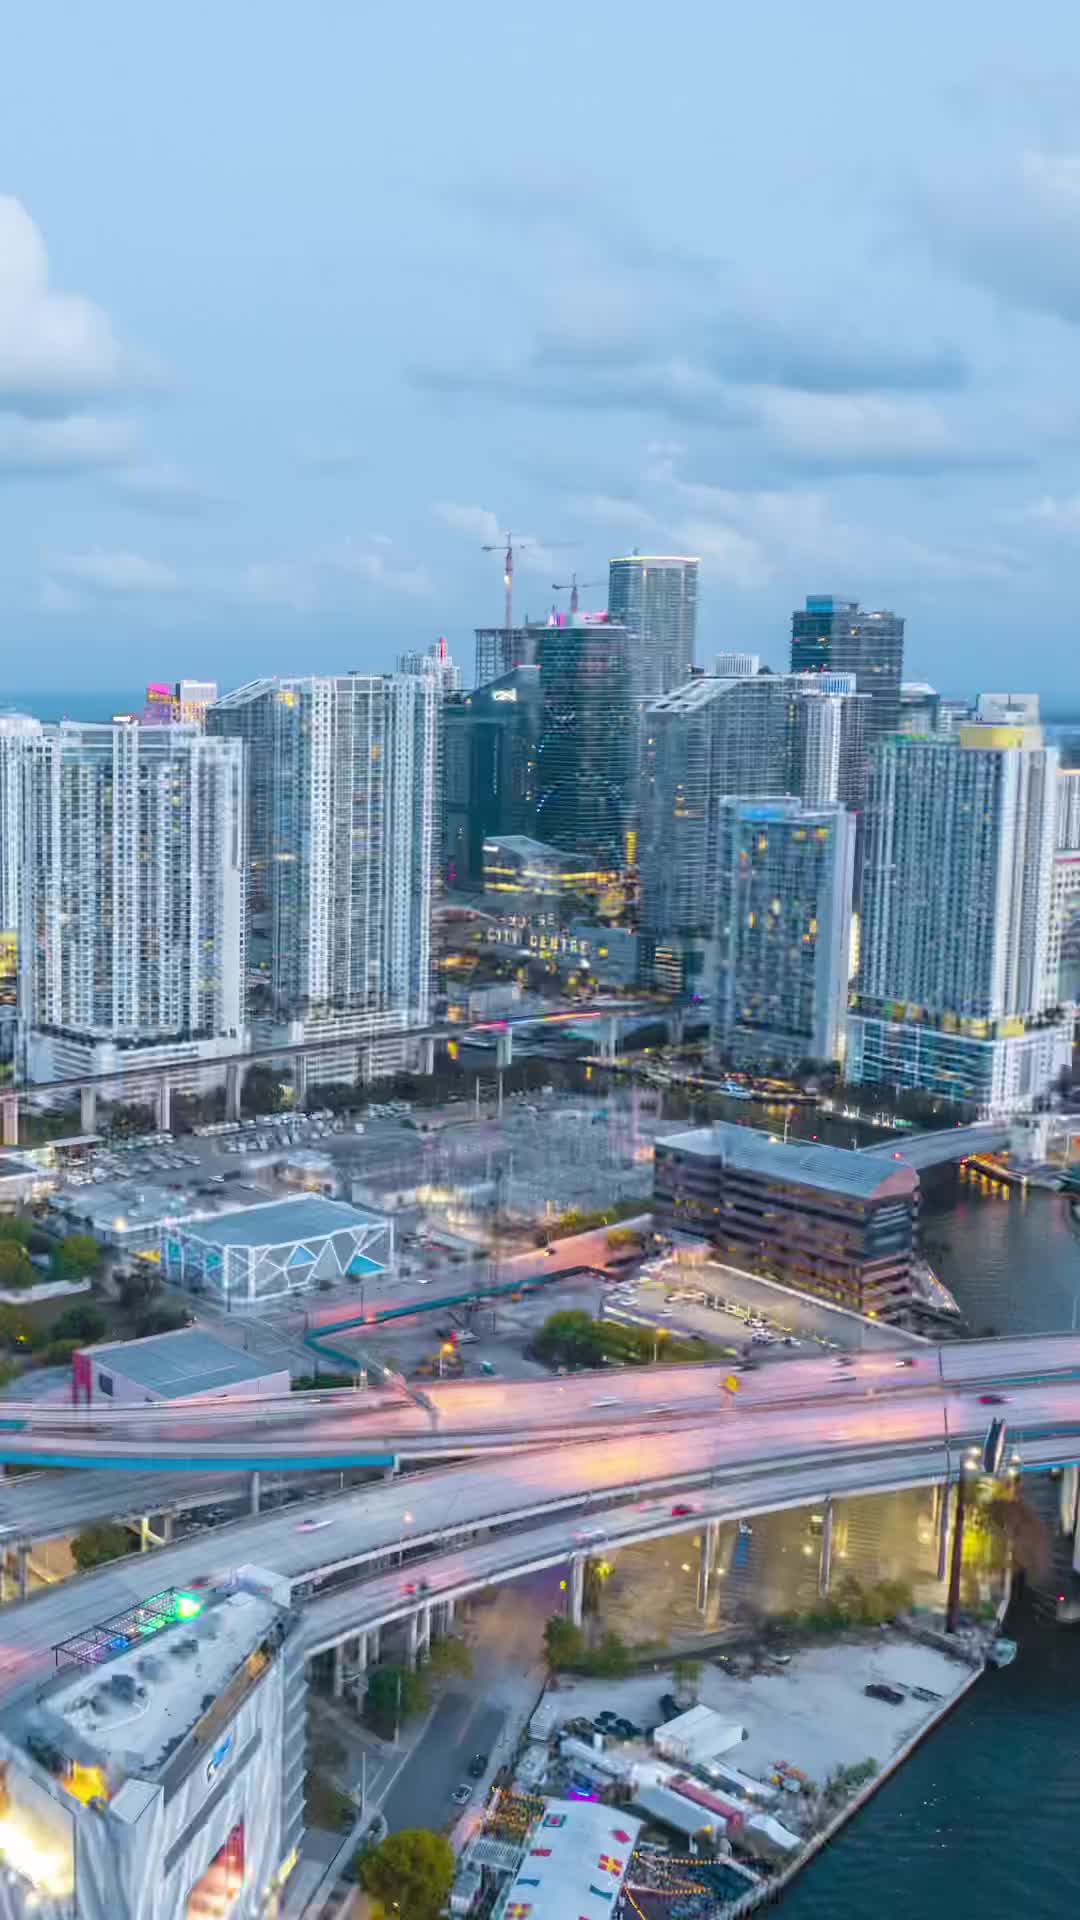 Brickell Miami Nightlife: Stunning Drone Footage